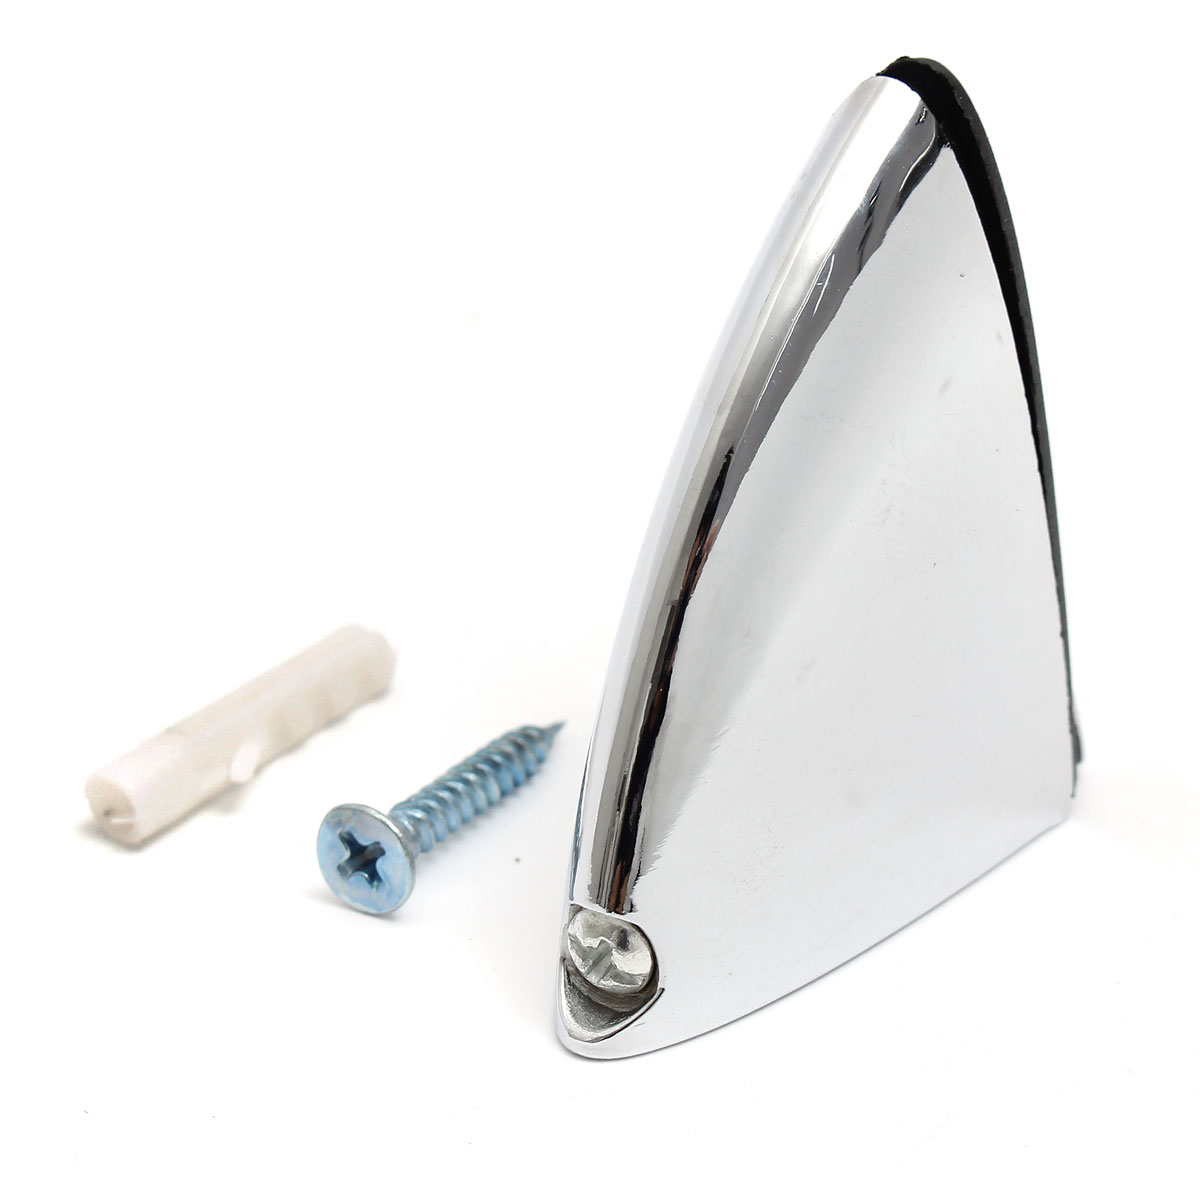  Polished Chrome Glass Shelf Support Clamp Brackets BathroomFor Shelves